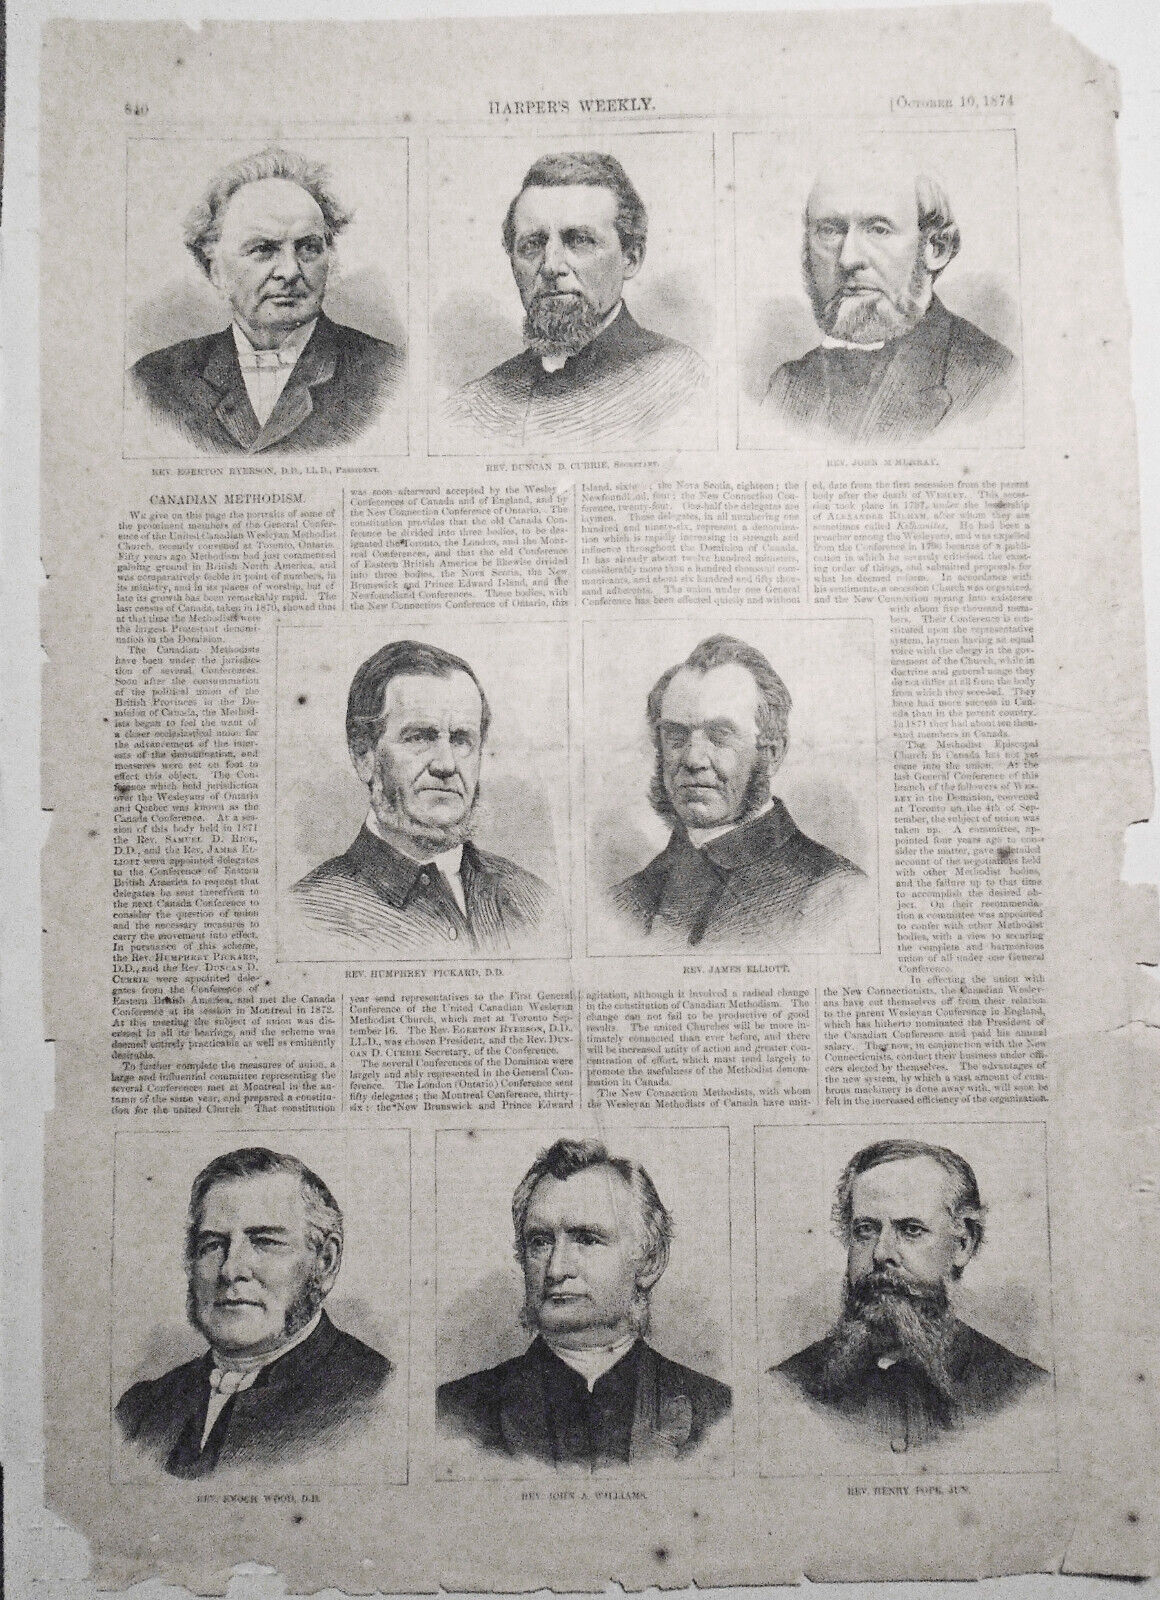 Canadian Methodism - Harper's Weekly, October 10, 1874 Original, Full Page.